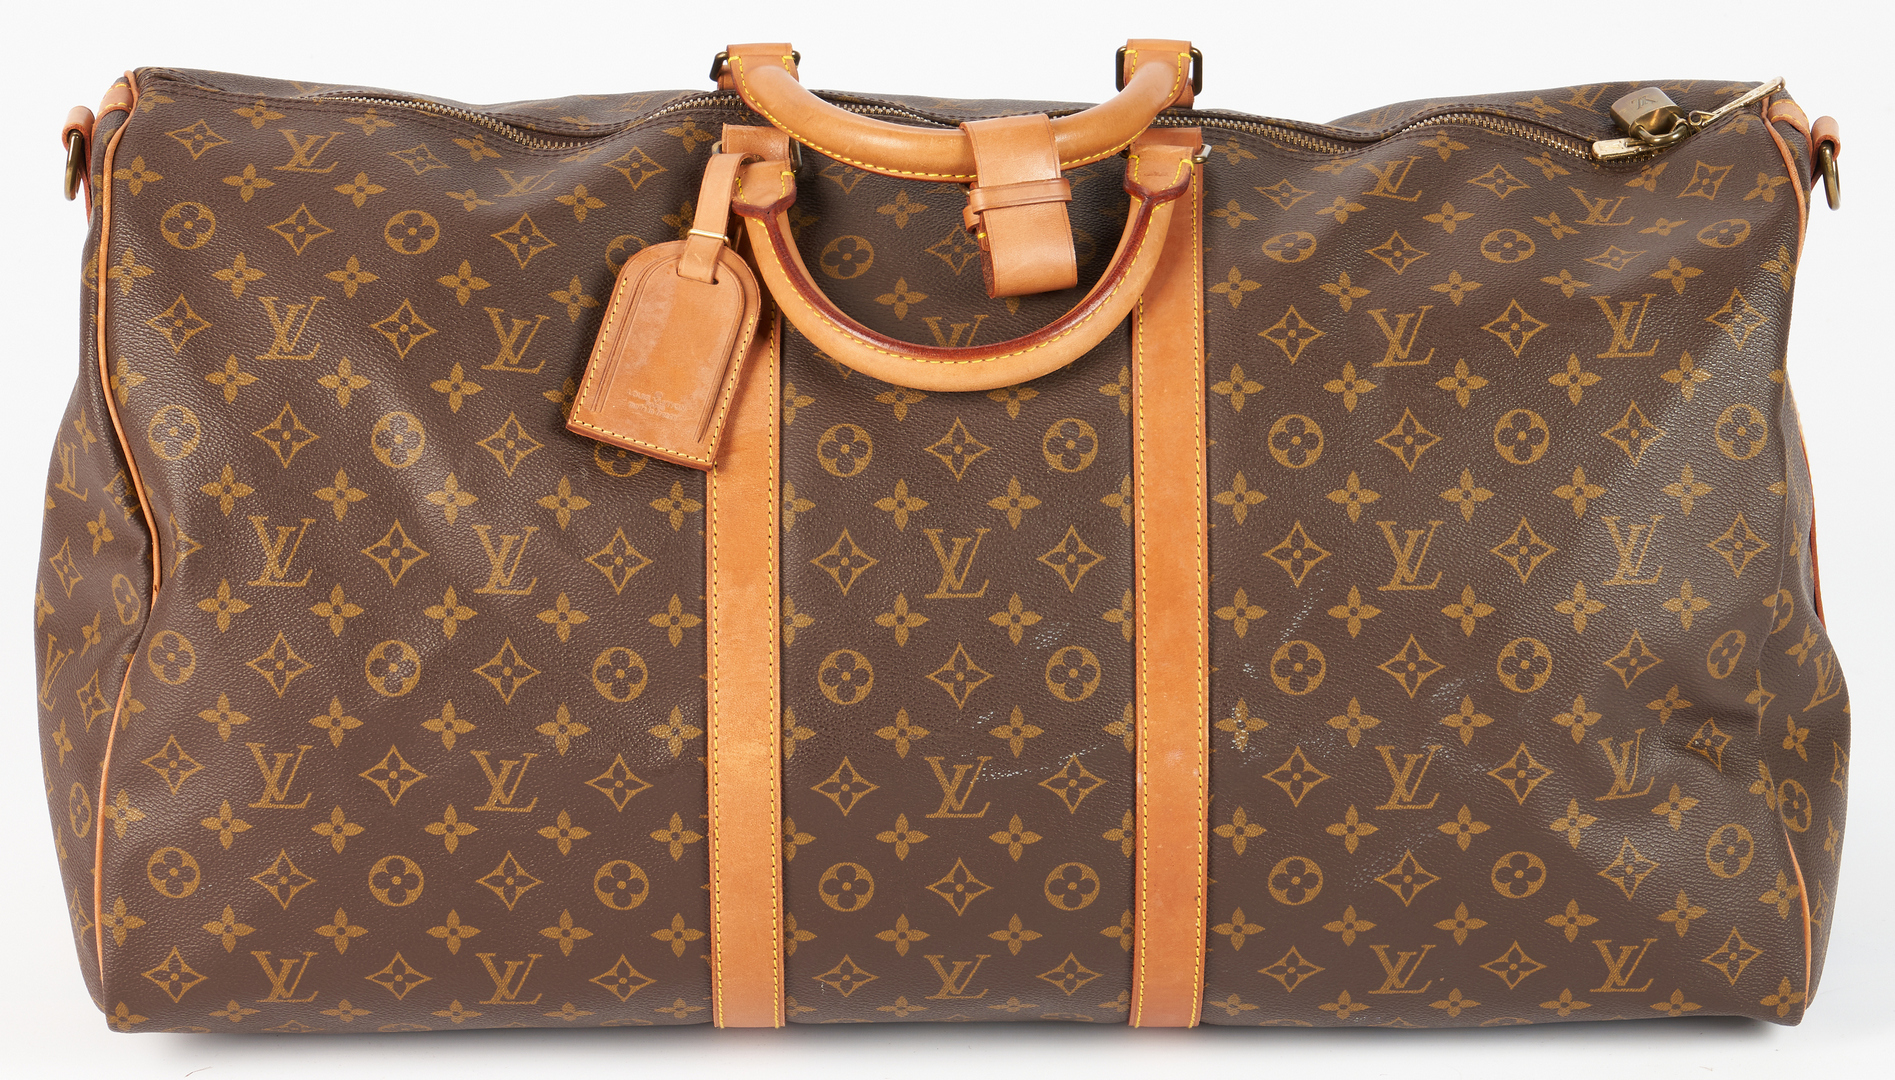 Lot 708: Louis Vuitton Keepall Duffle Bag